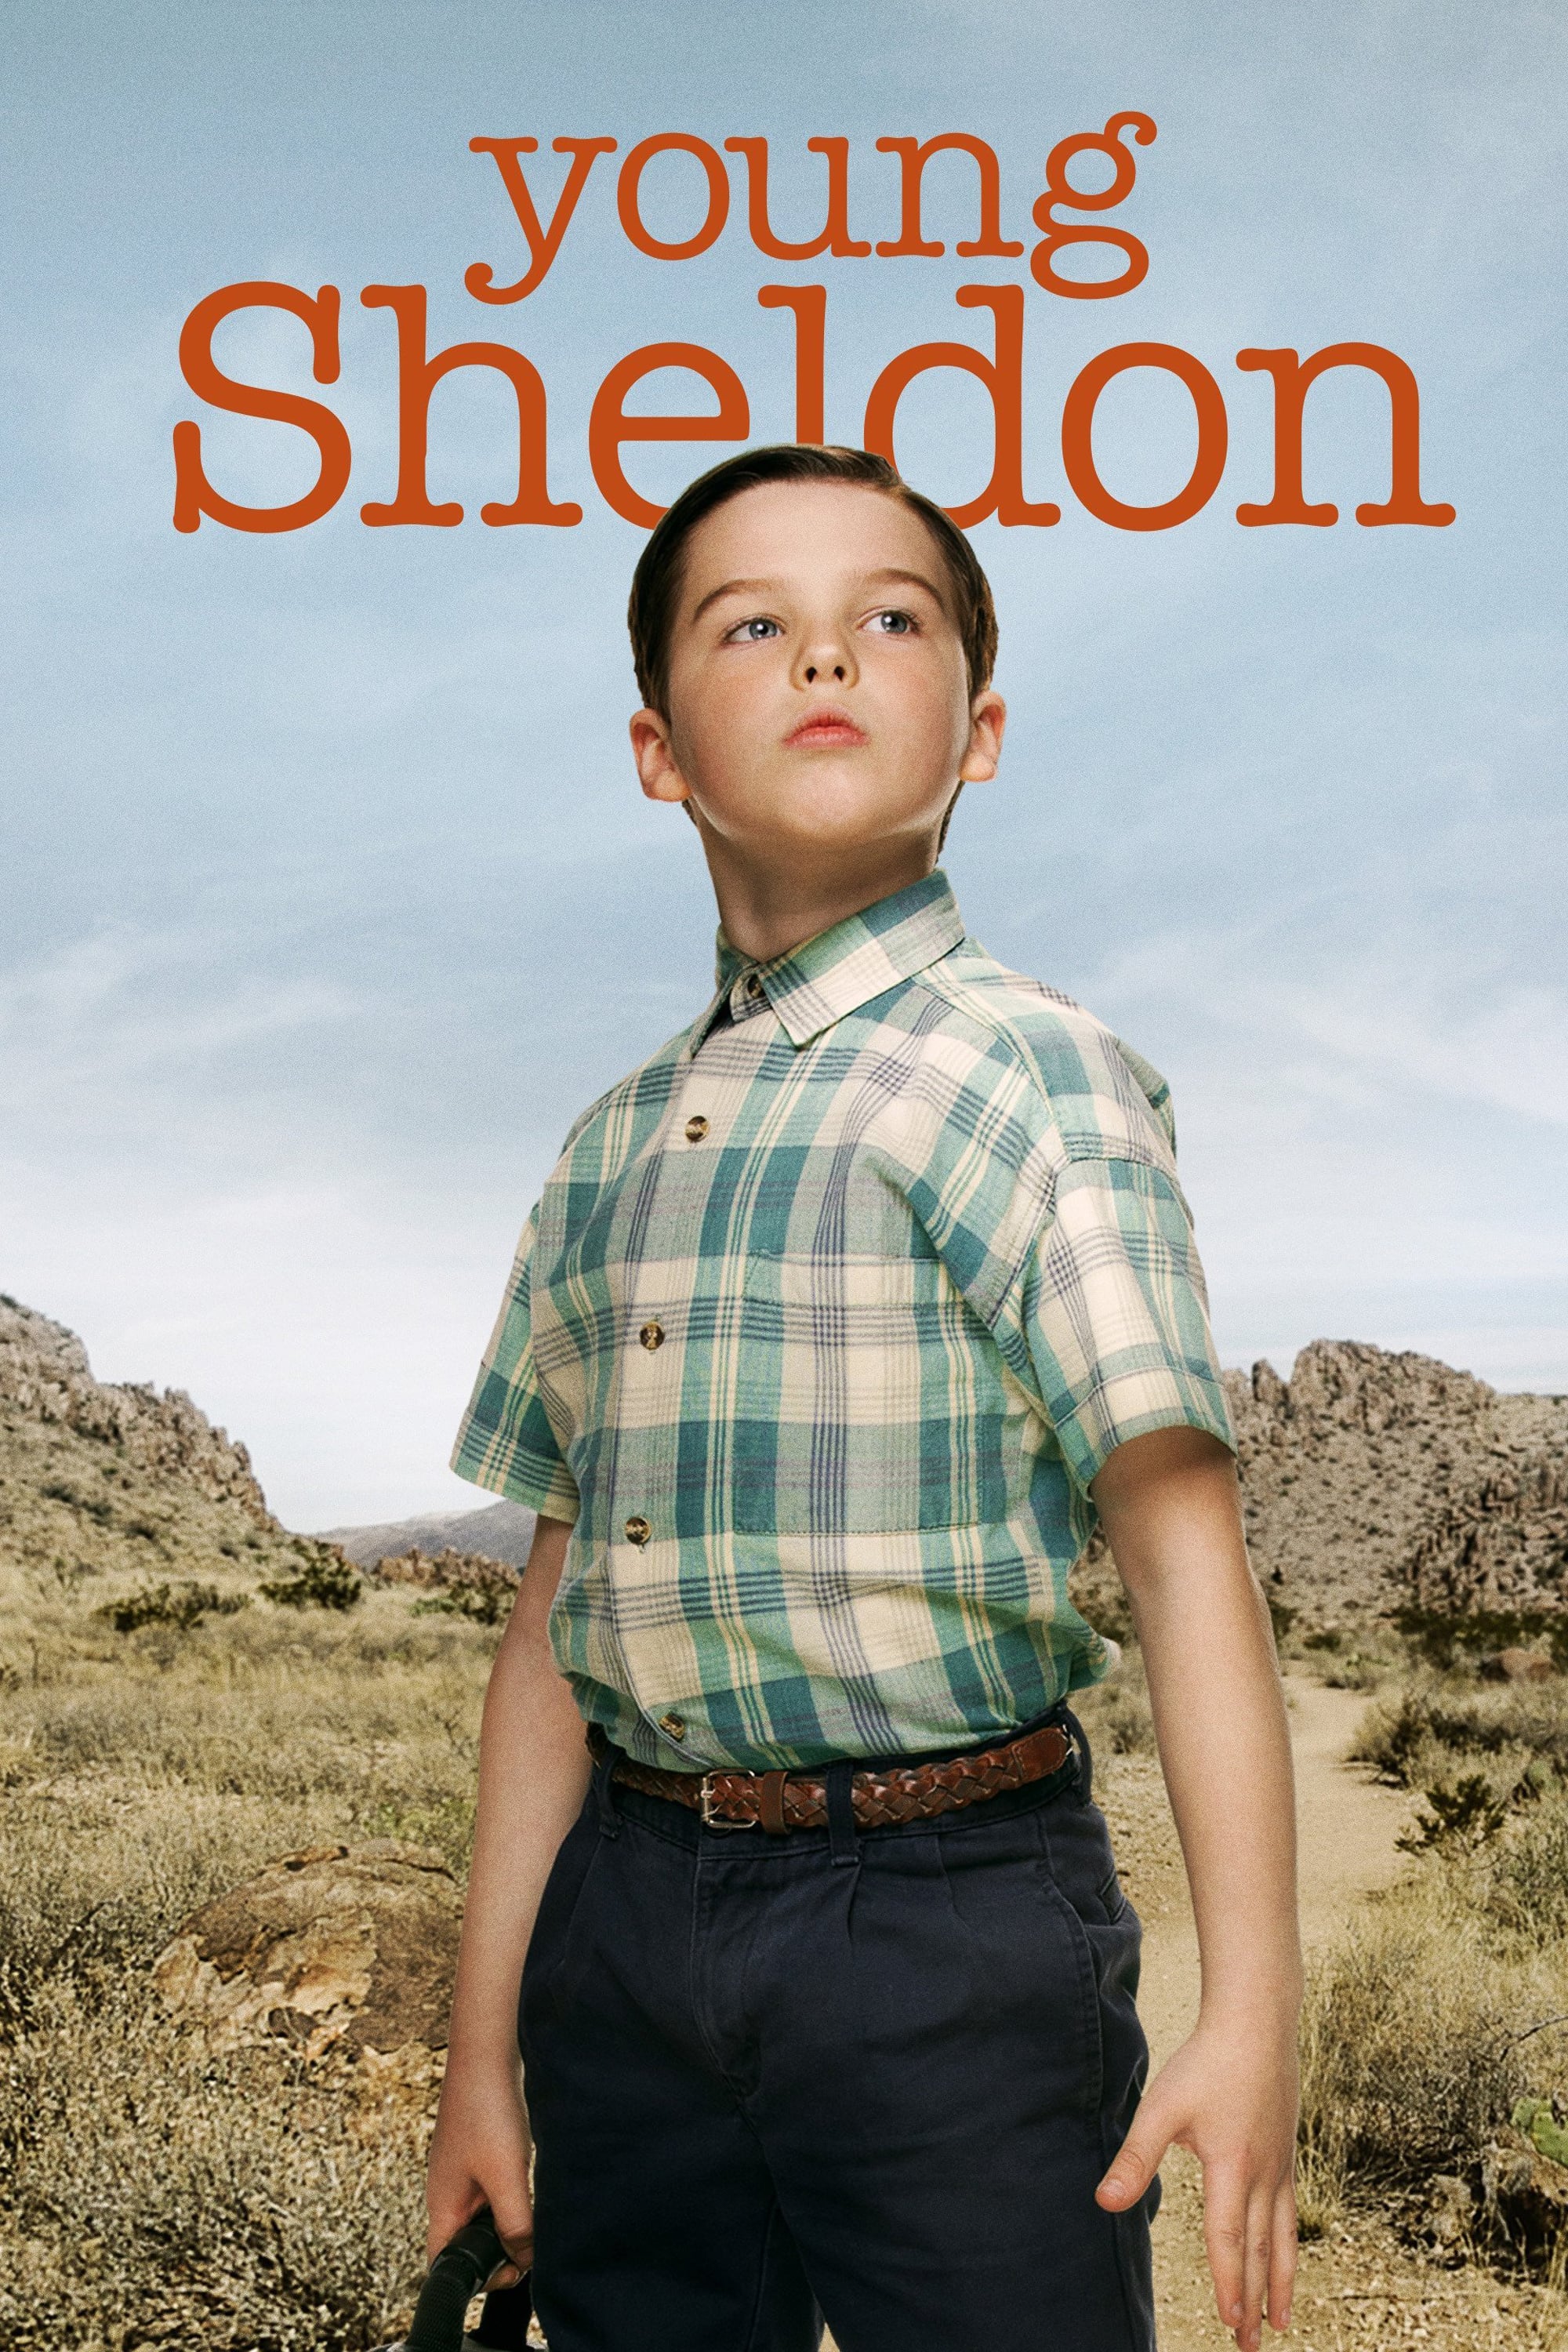 Young Sheldon - Saison 3